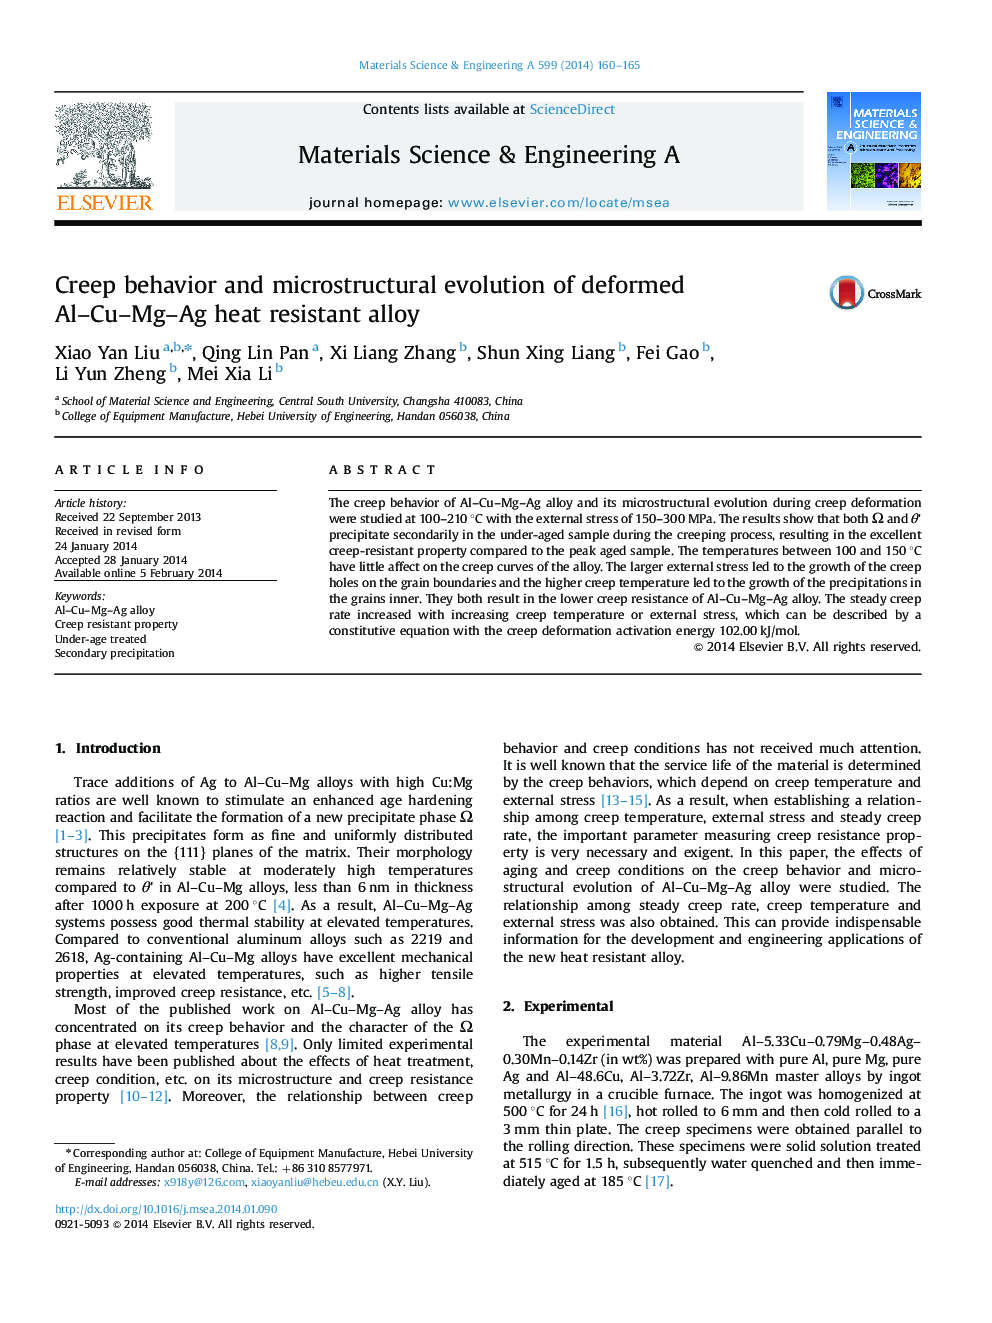 Creep behavior and microstructural evolution of deformed Al-Cu-Mg-Ag heat resistant alloy